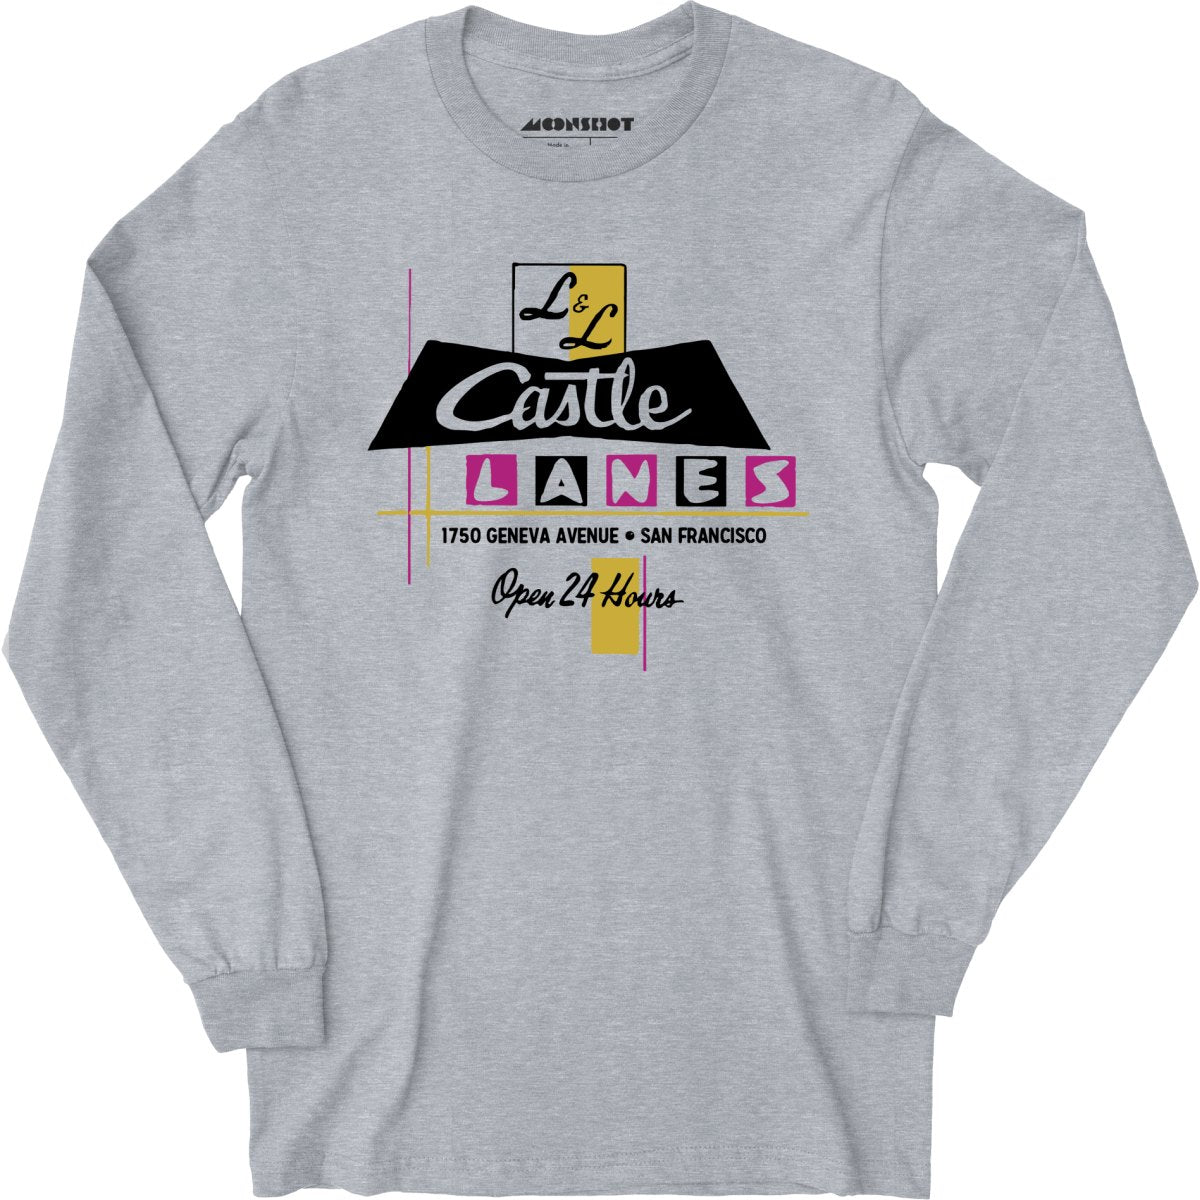 L & L Castle Lanes - San Francisco, CA - Vintage Bowling Alley - Long Sleeve T-Shirt